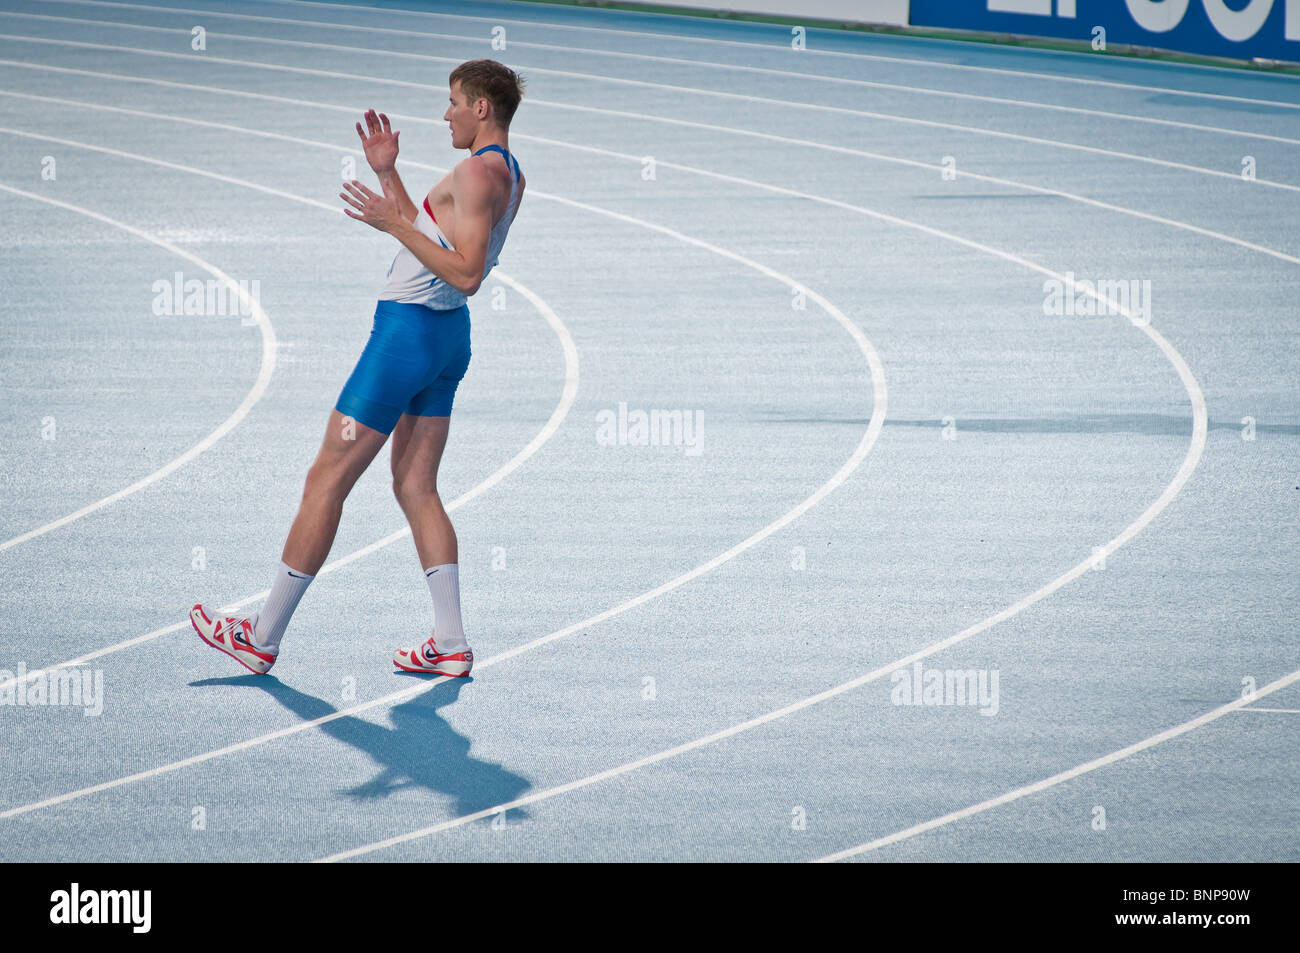 July 29th at the 2010 Barcelona European Athletics Championships (High jump gold medl winner Russian Aleksander Shustov) Stock Photo